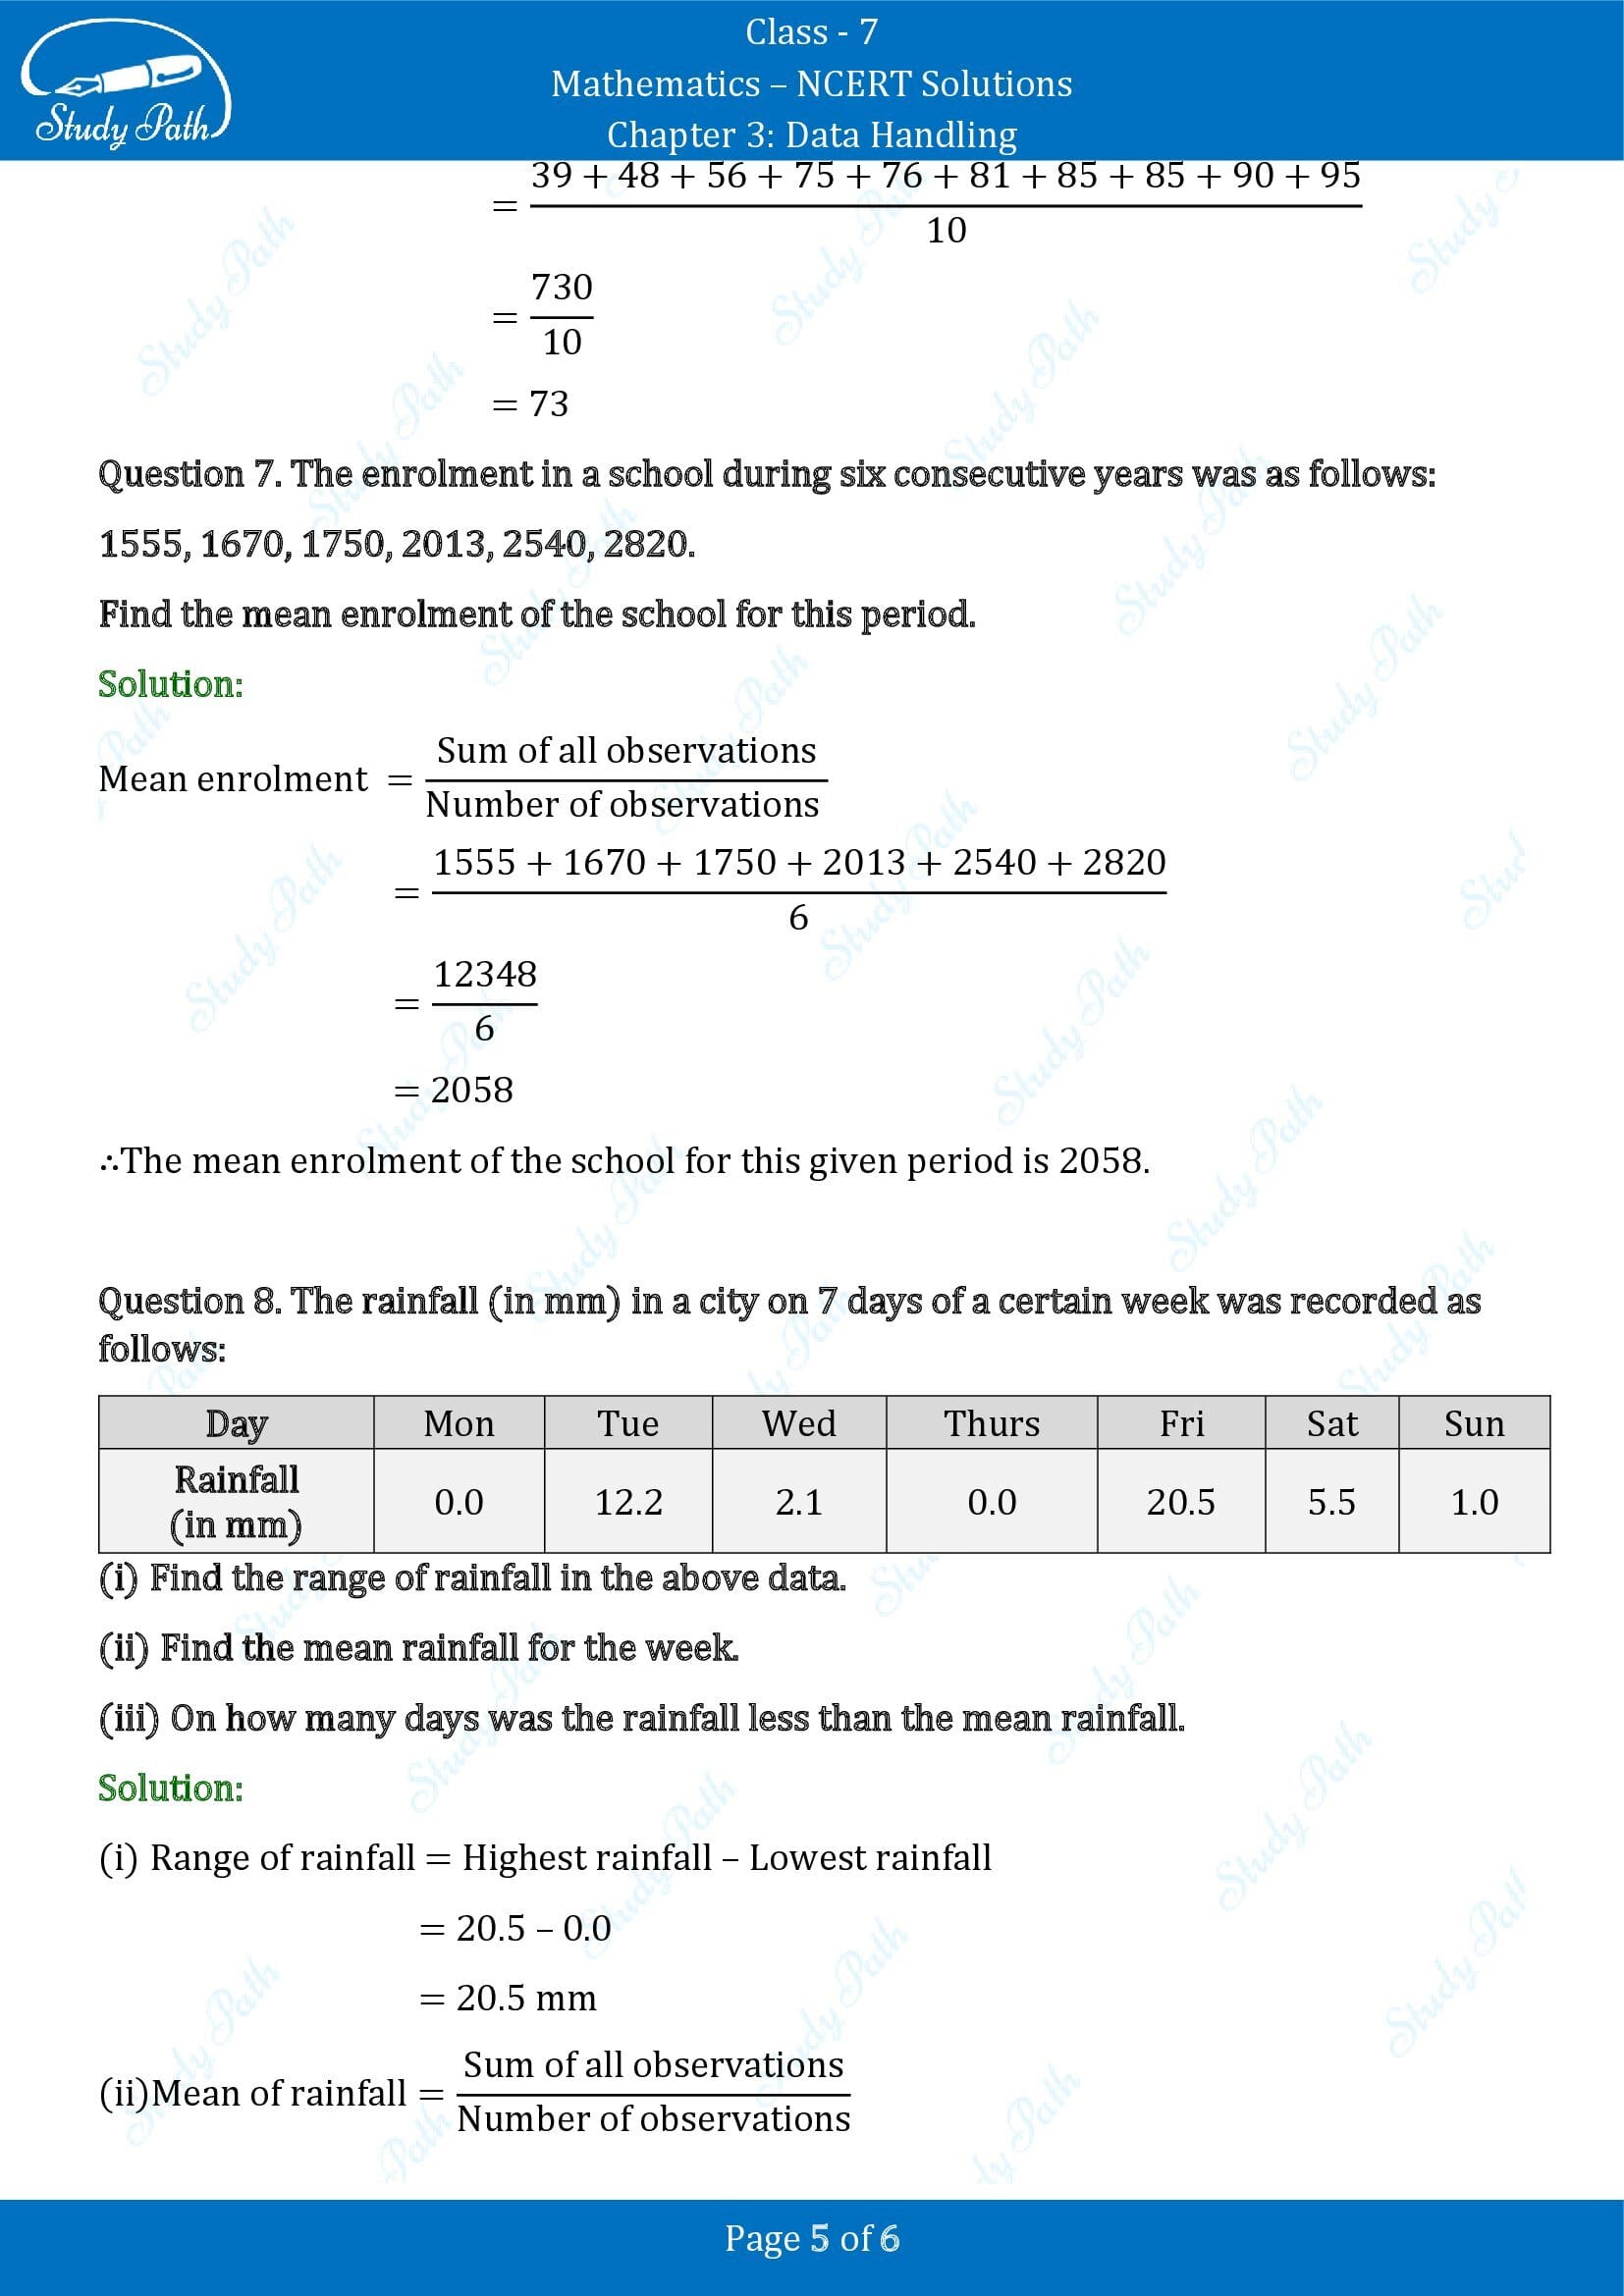 NCERT Solutions for Class 7 Maths Chapter 3 Data Handling Exercise 3.1 00005